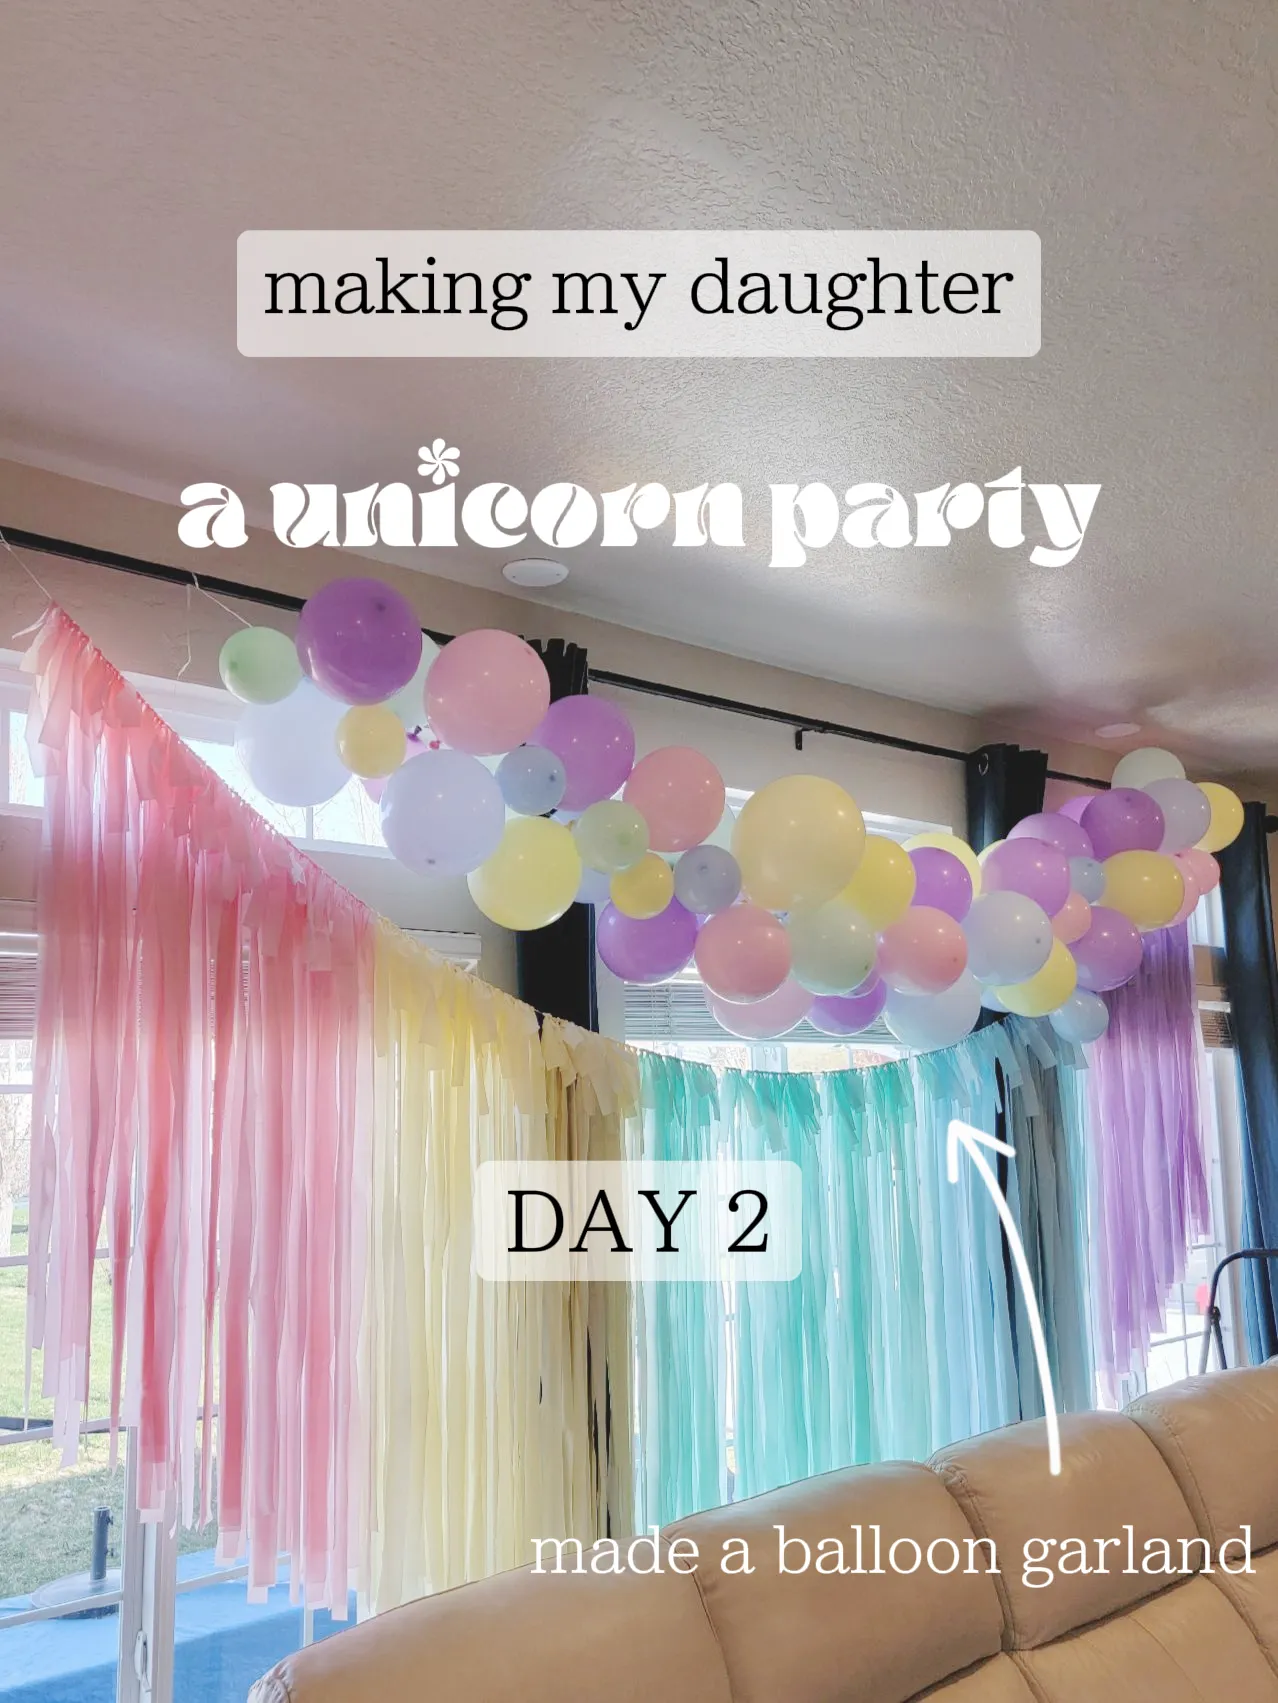 Unique Birthday Party Ideas for A Unicorn Lover - Lemon8 Search